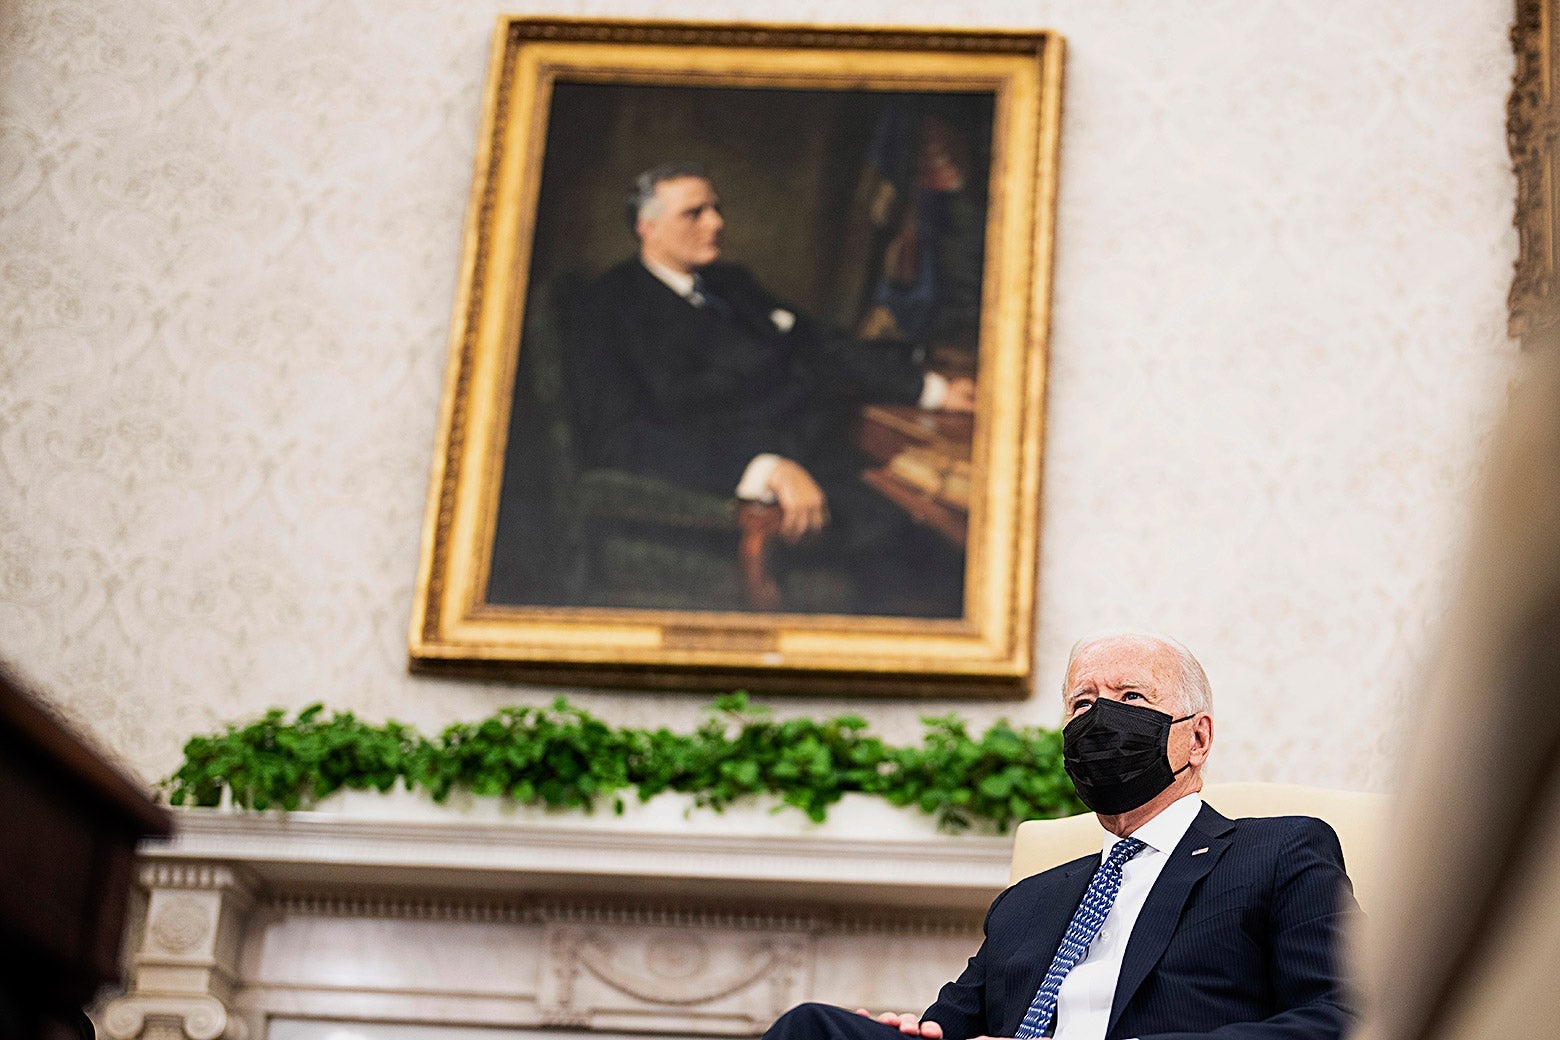  Joe Biden sits underneath a portrait of former President Franklin D. Roosevelt in the Oval Office.